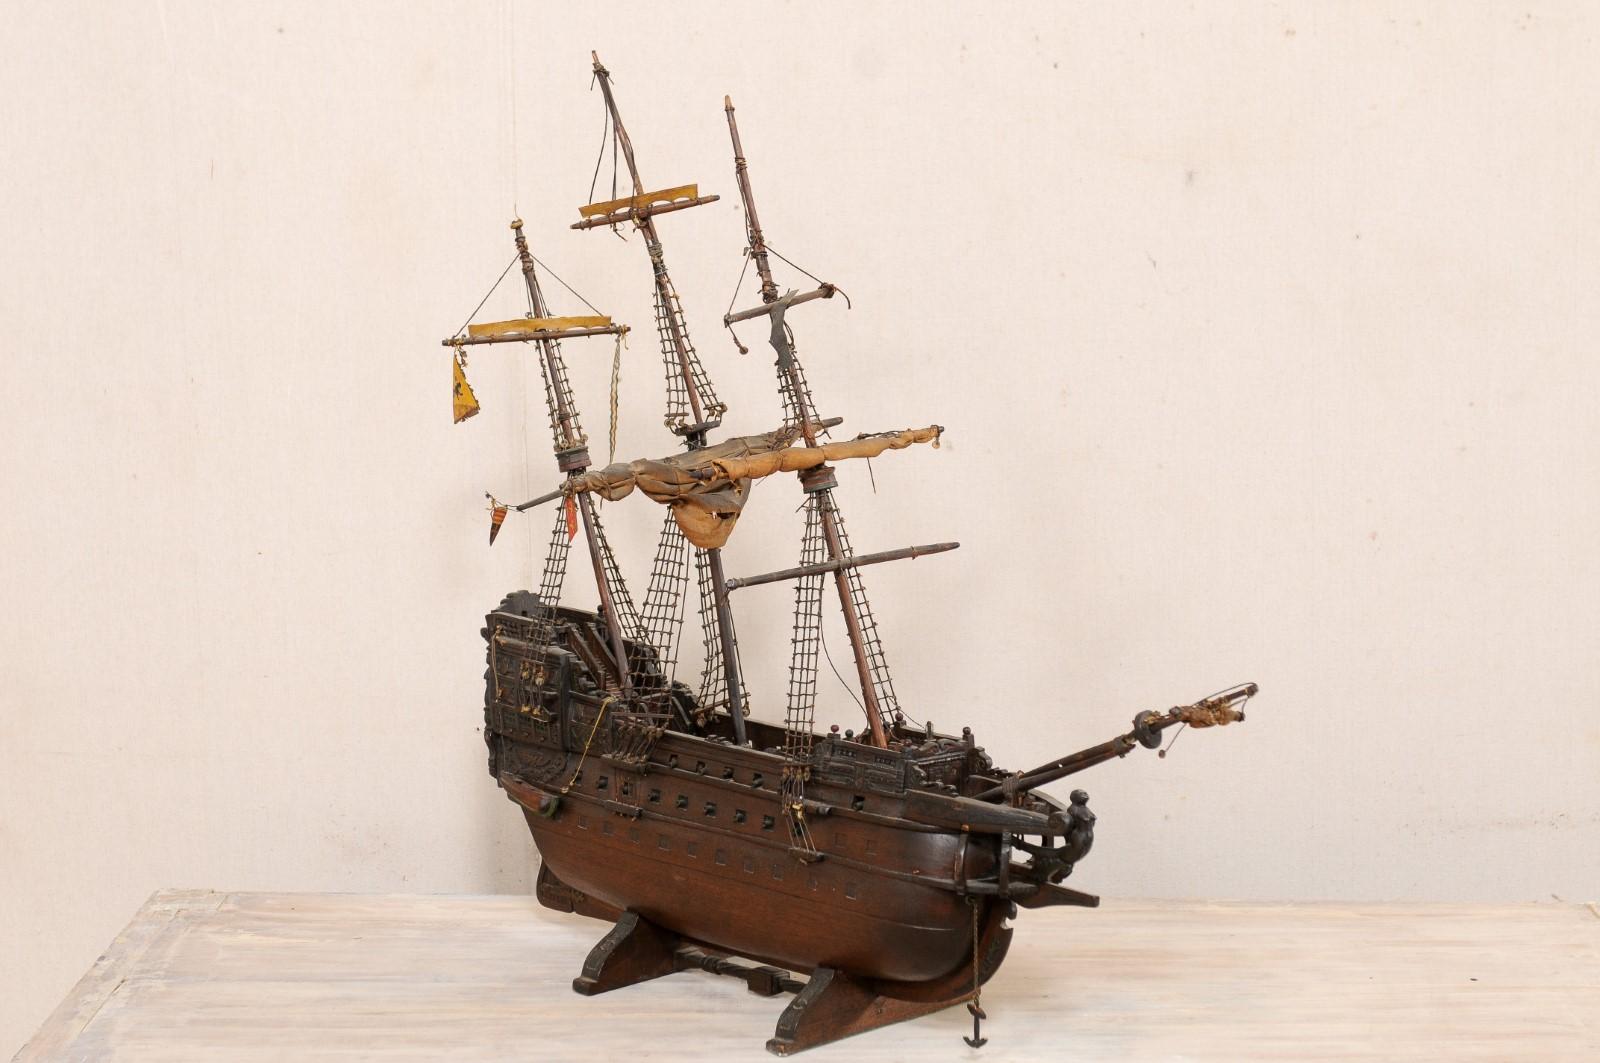 20th Century Italian Wooden Ship Model of a 15th/16th C. Galleon, Tall Ship, 3-Masat Schooner For Sale